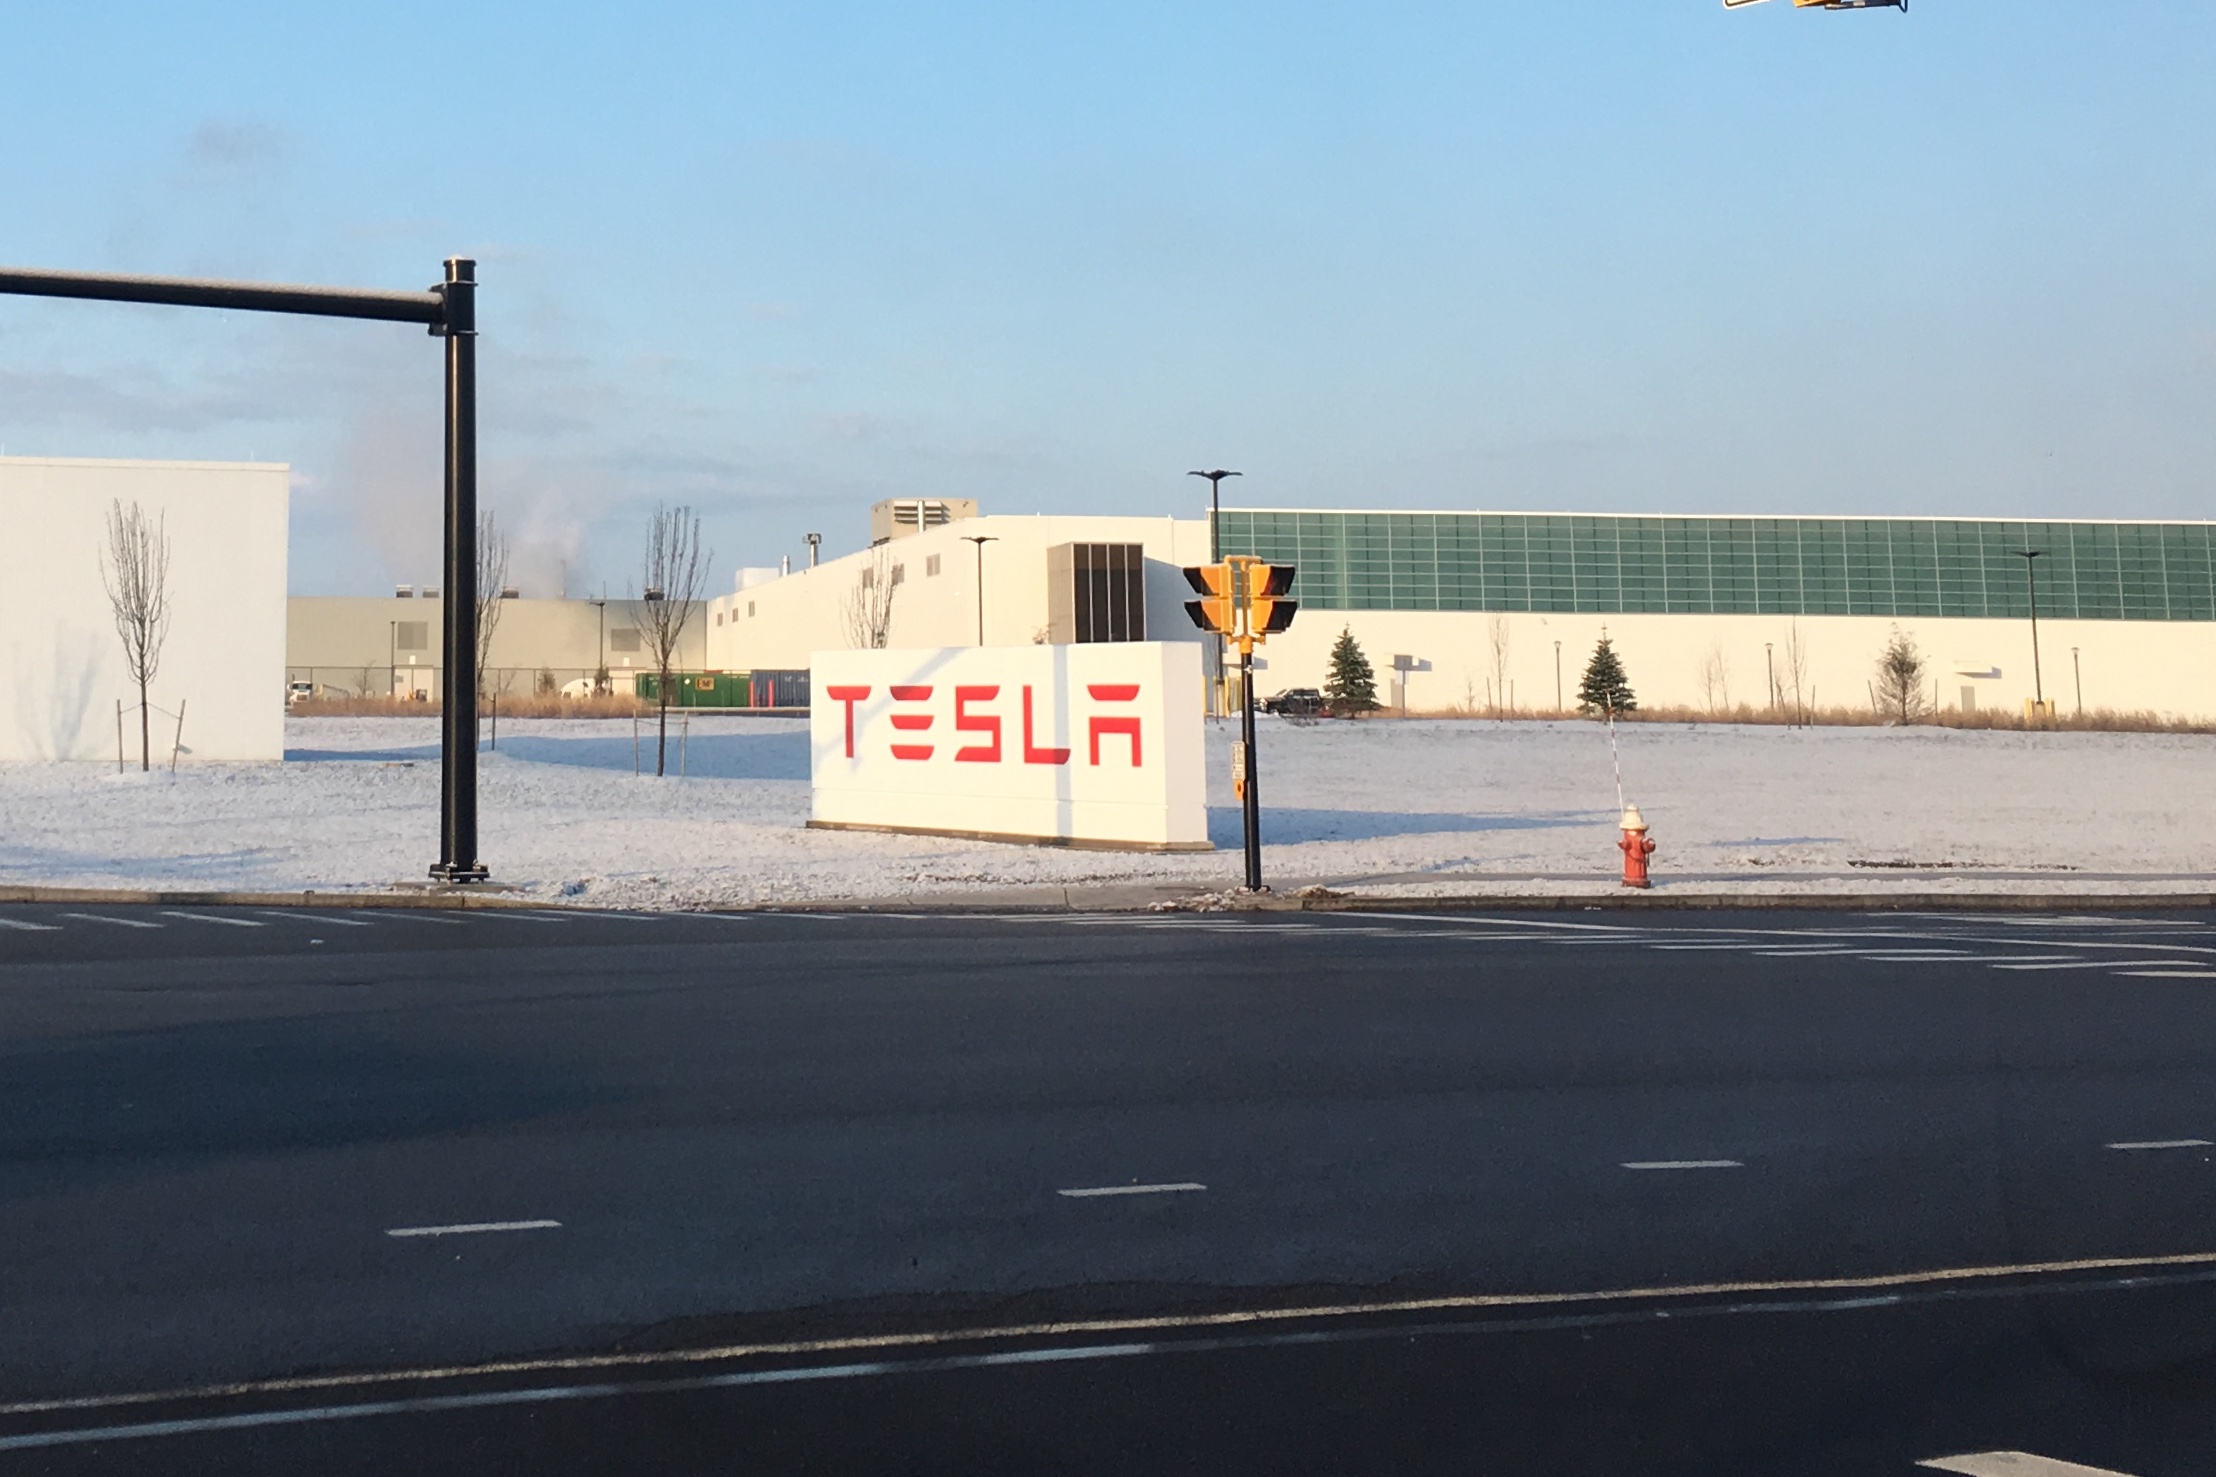 Tesla_sign_2.jpg